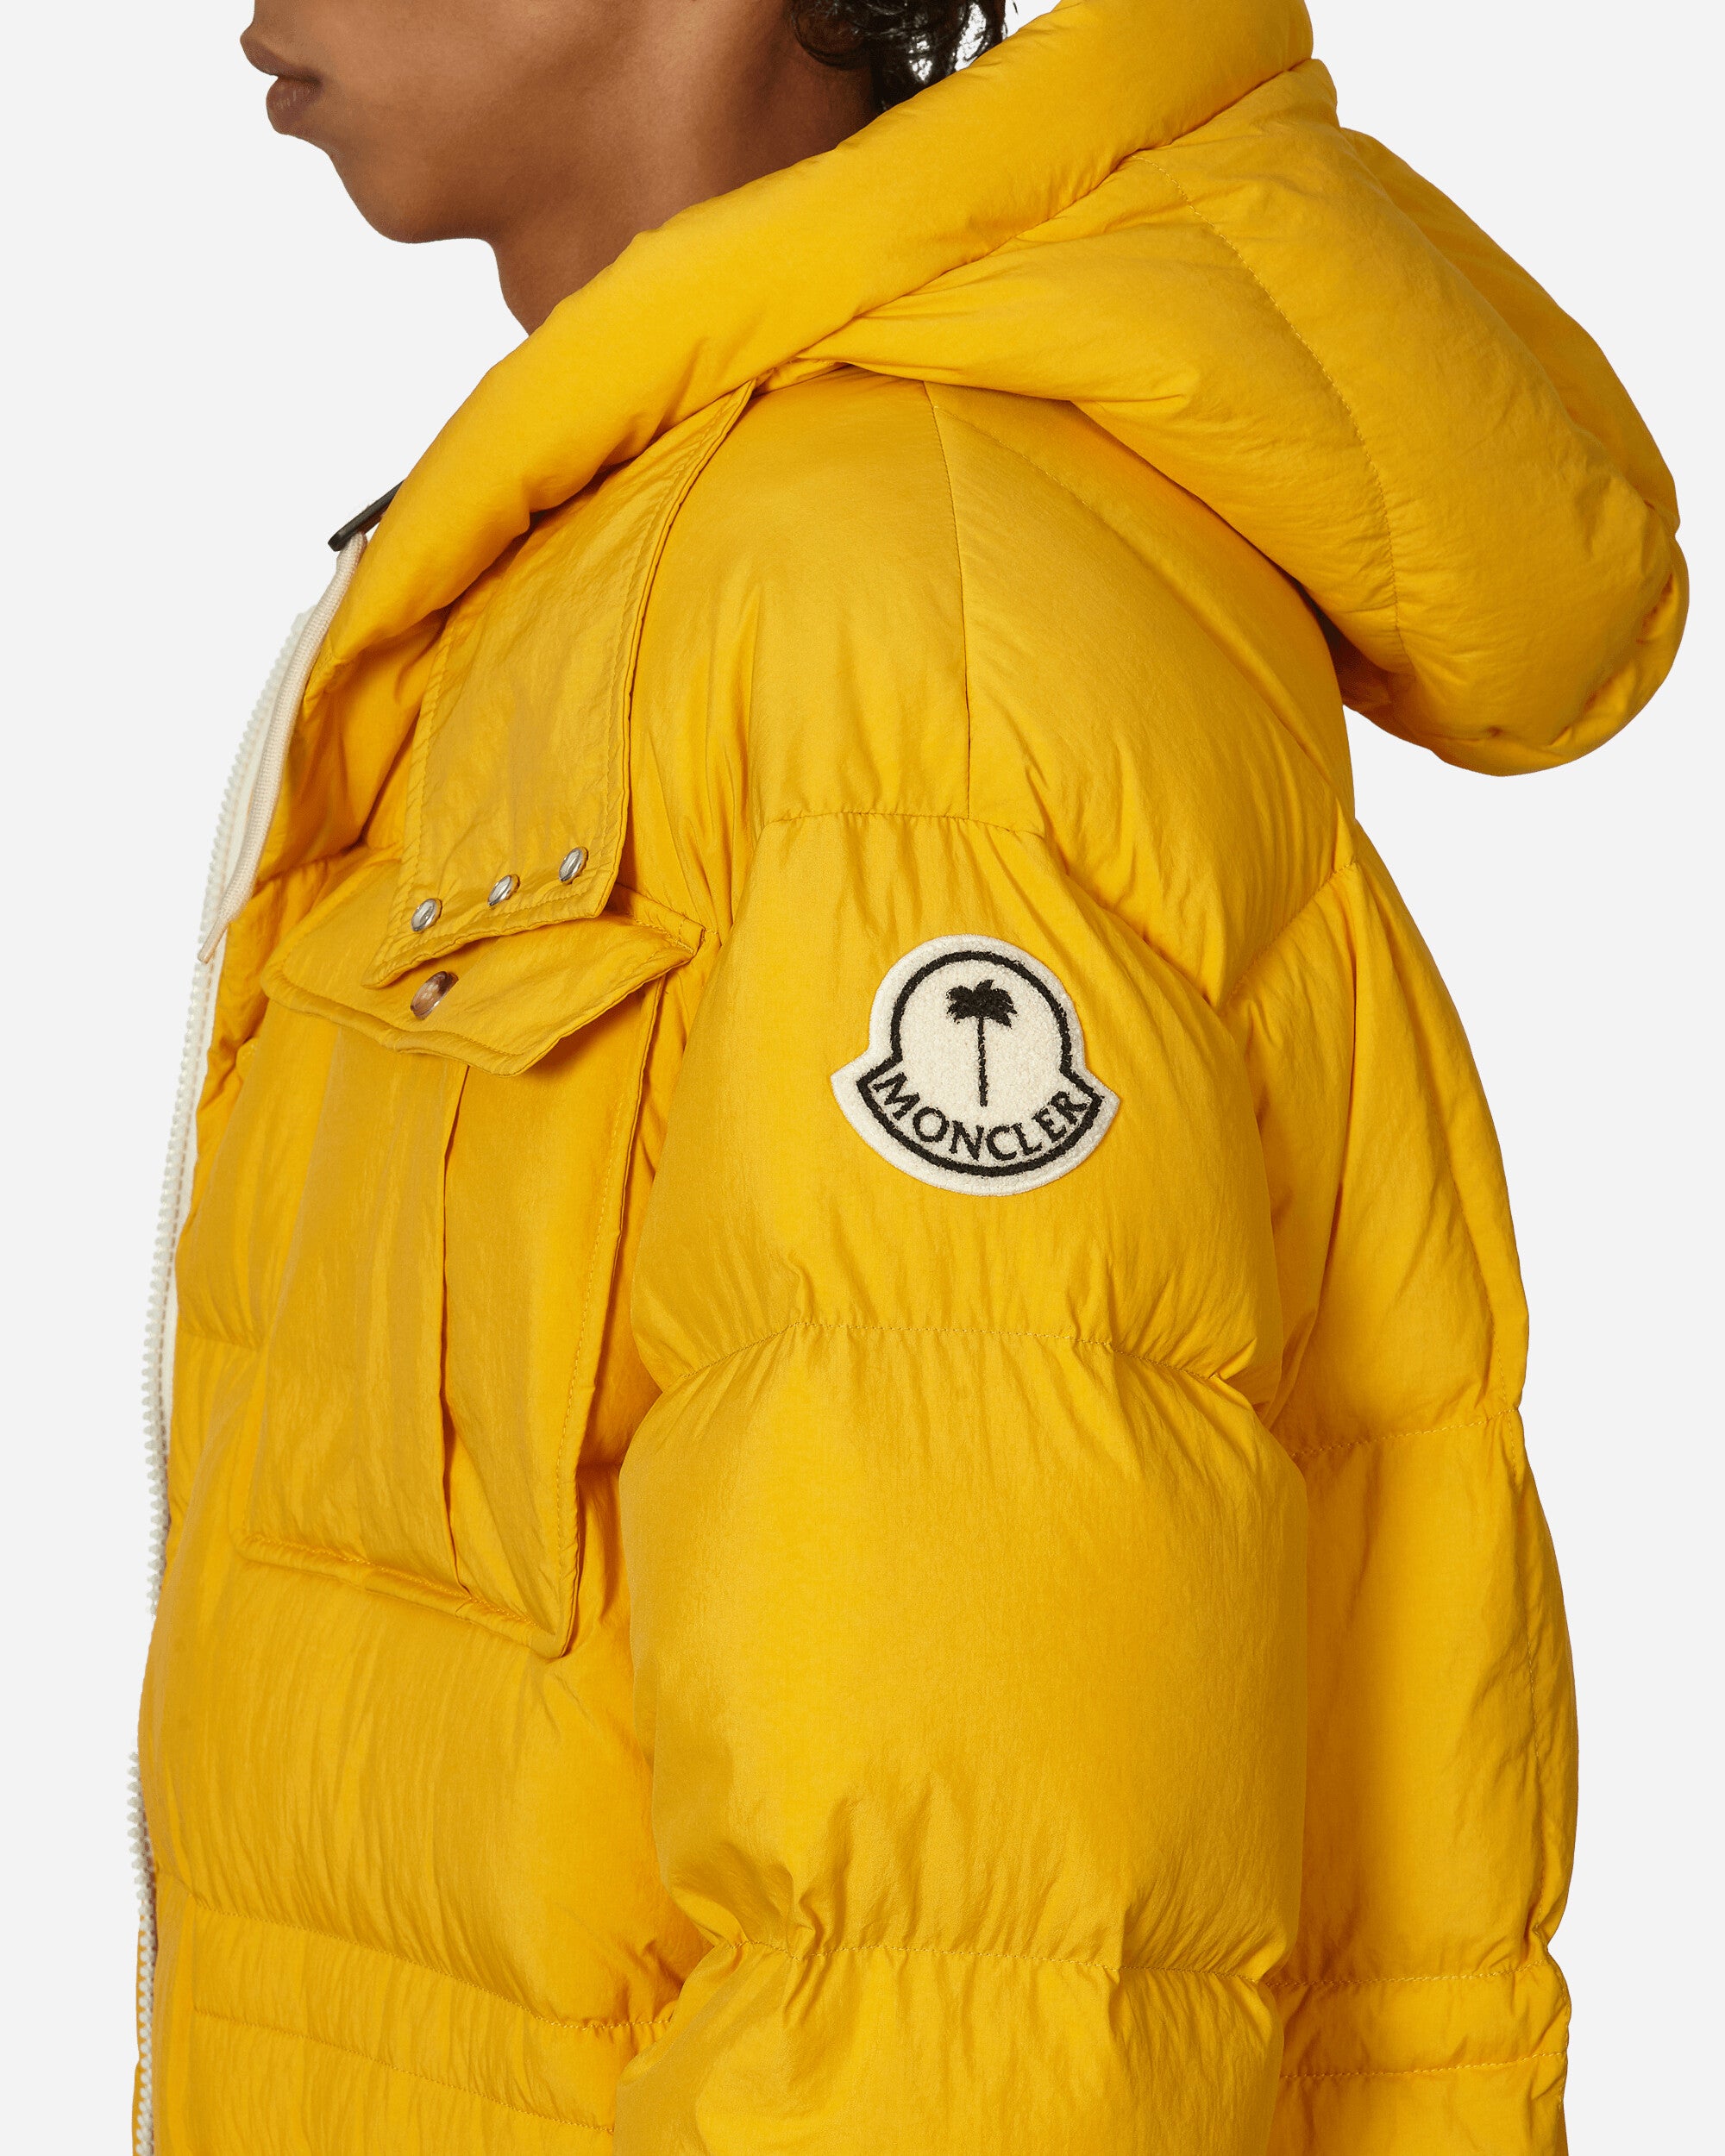 Moncler Genius Pentaflake Long Parka X Palm Angels Yellow Coats and Jackets Parka Jackets 1C00002M3377 130